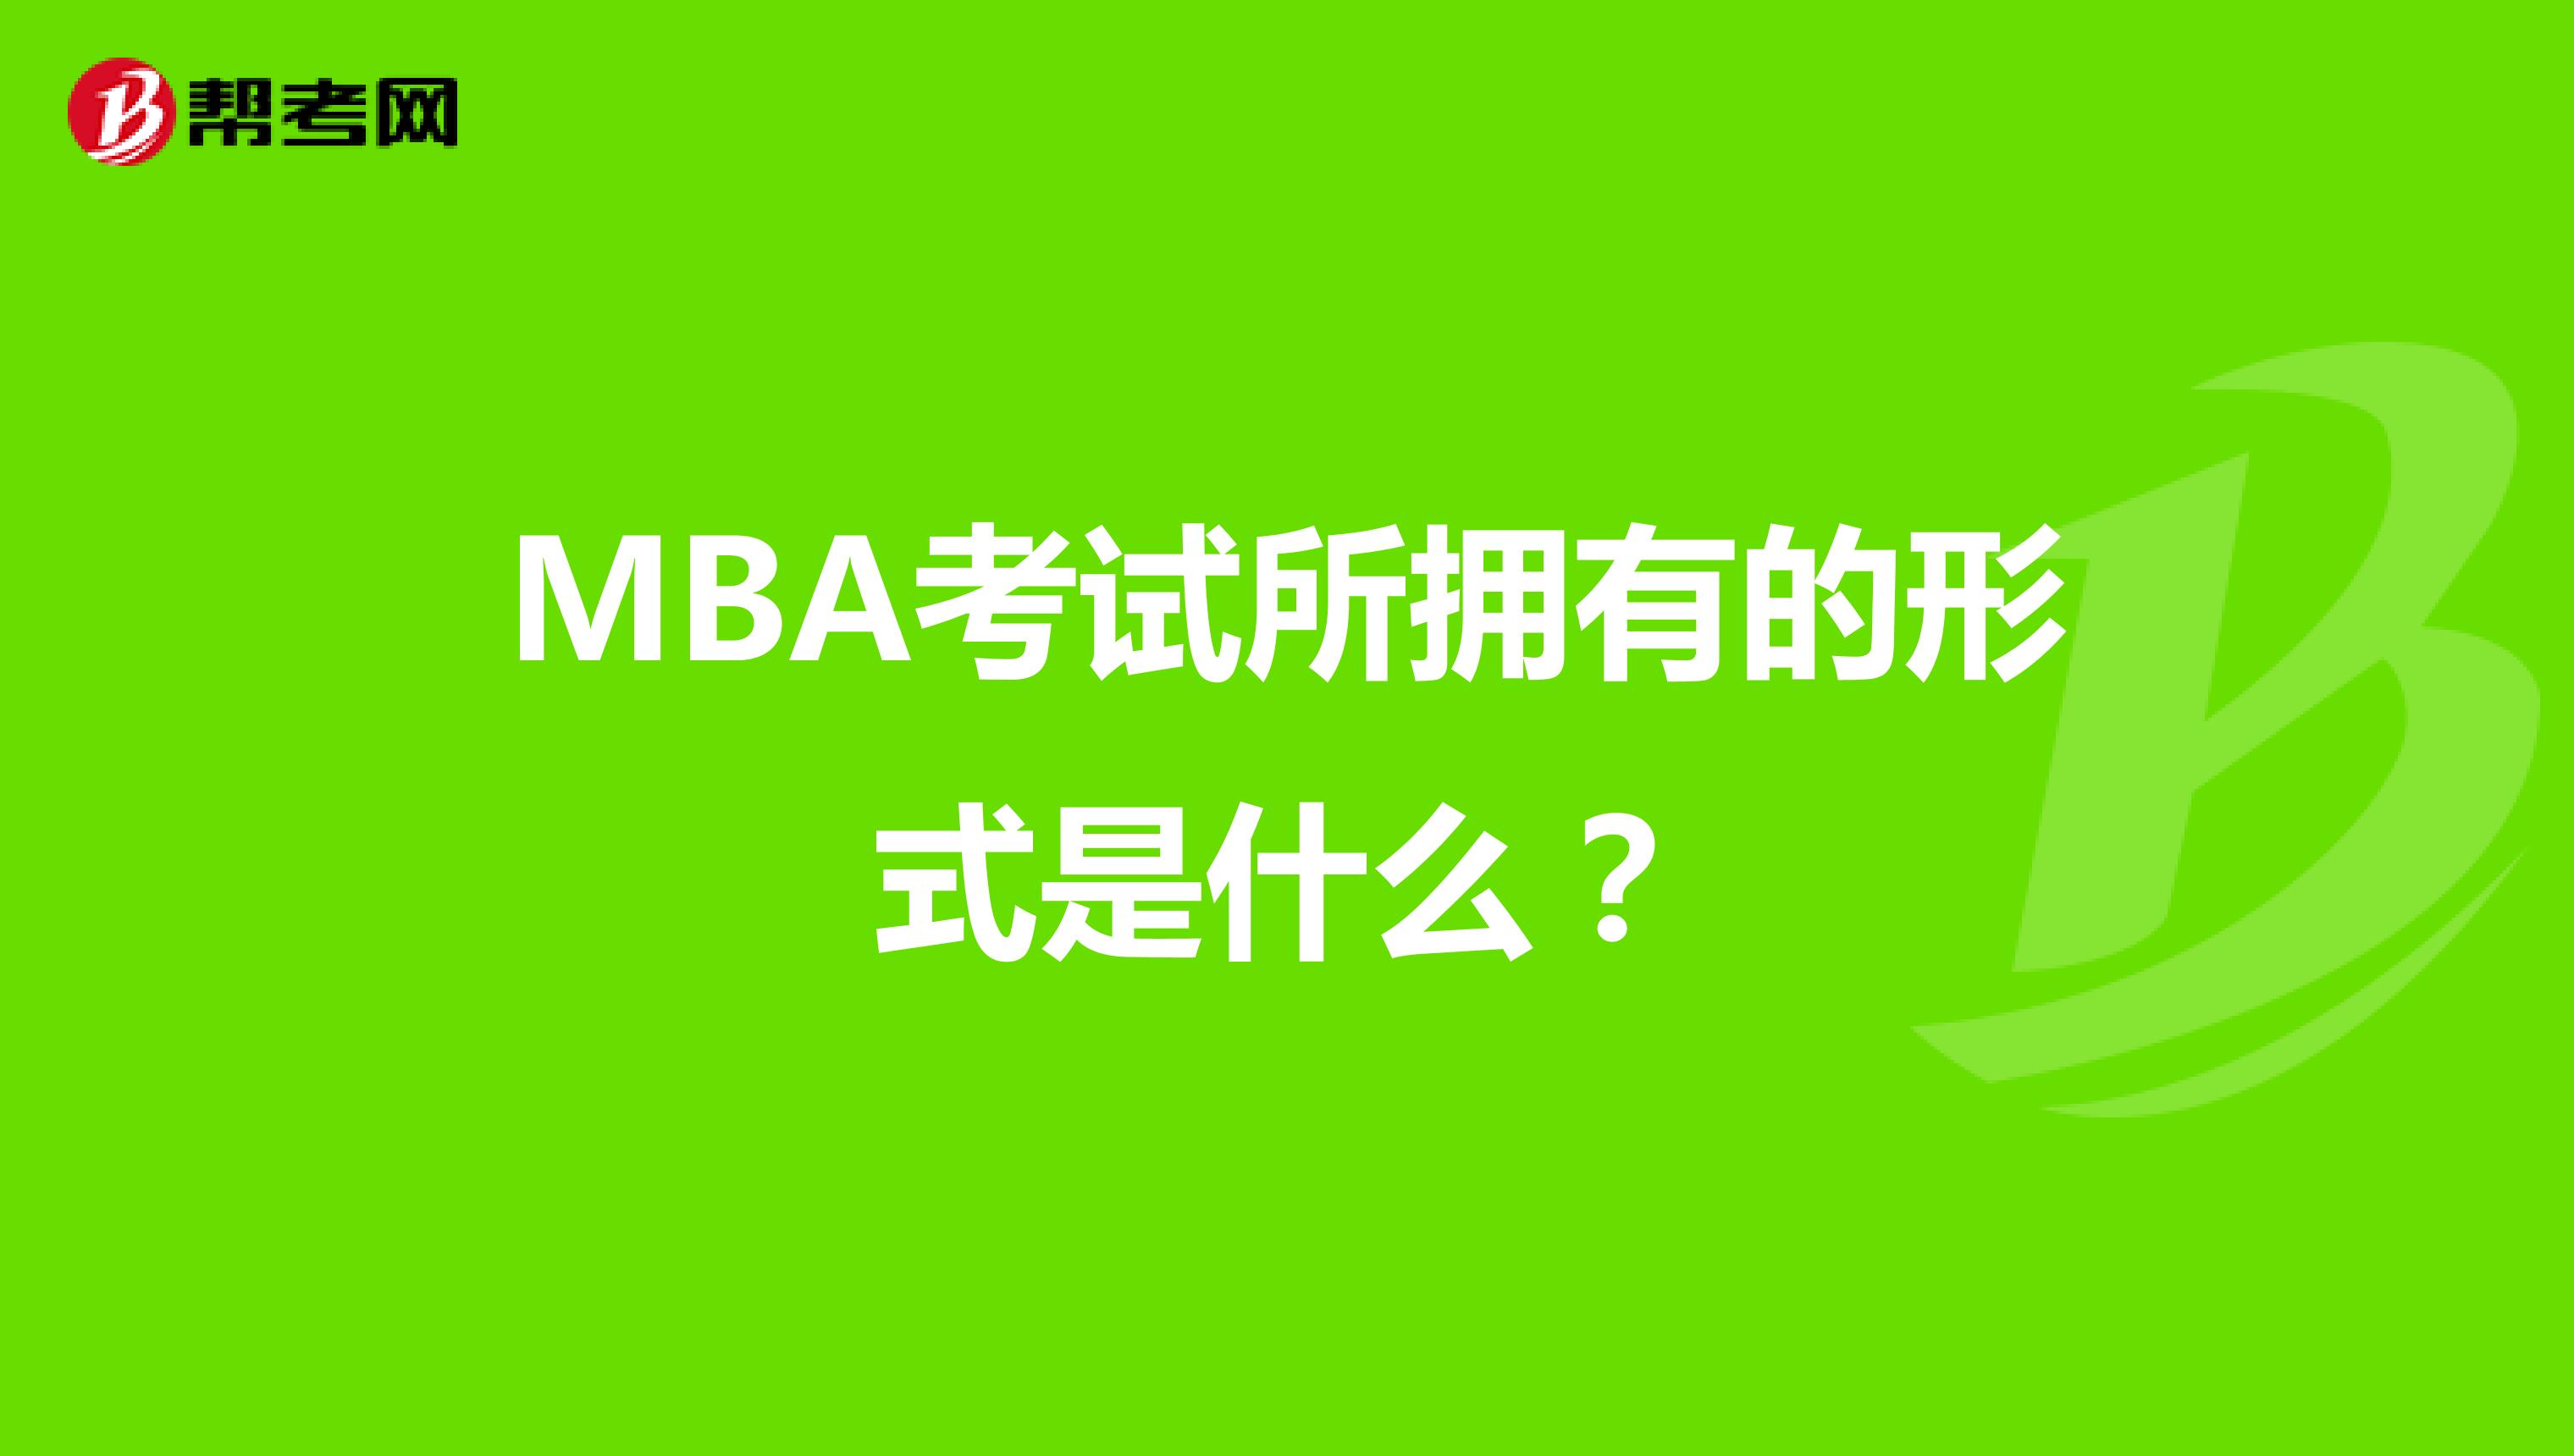 MBA考试所拥有的形式是什么？